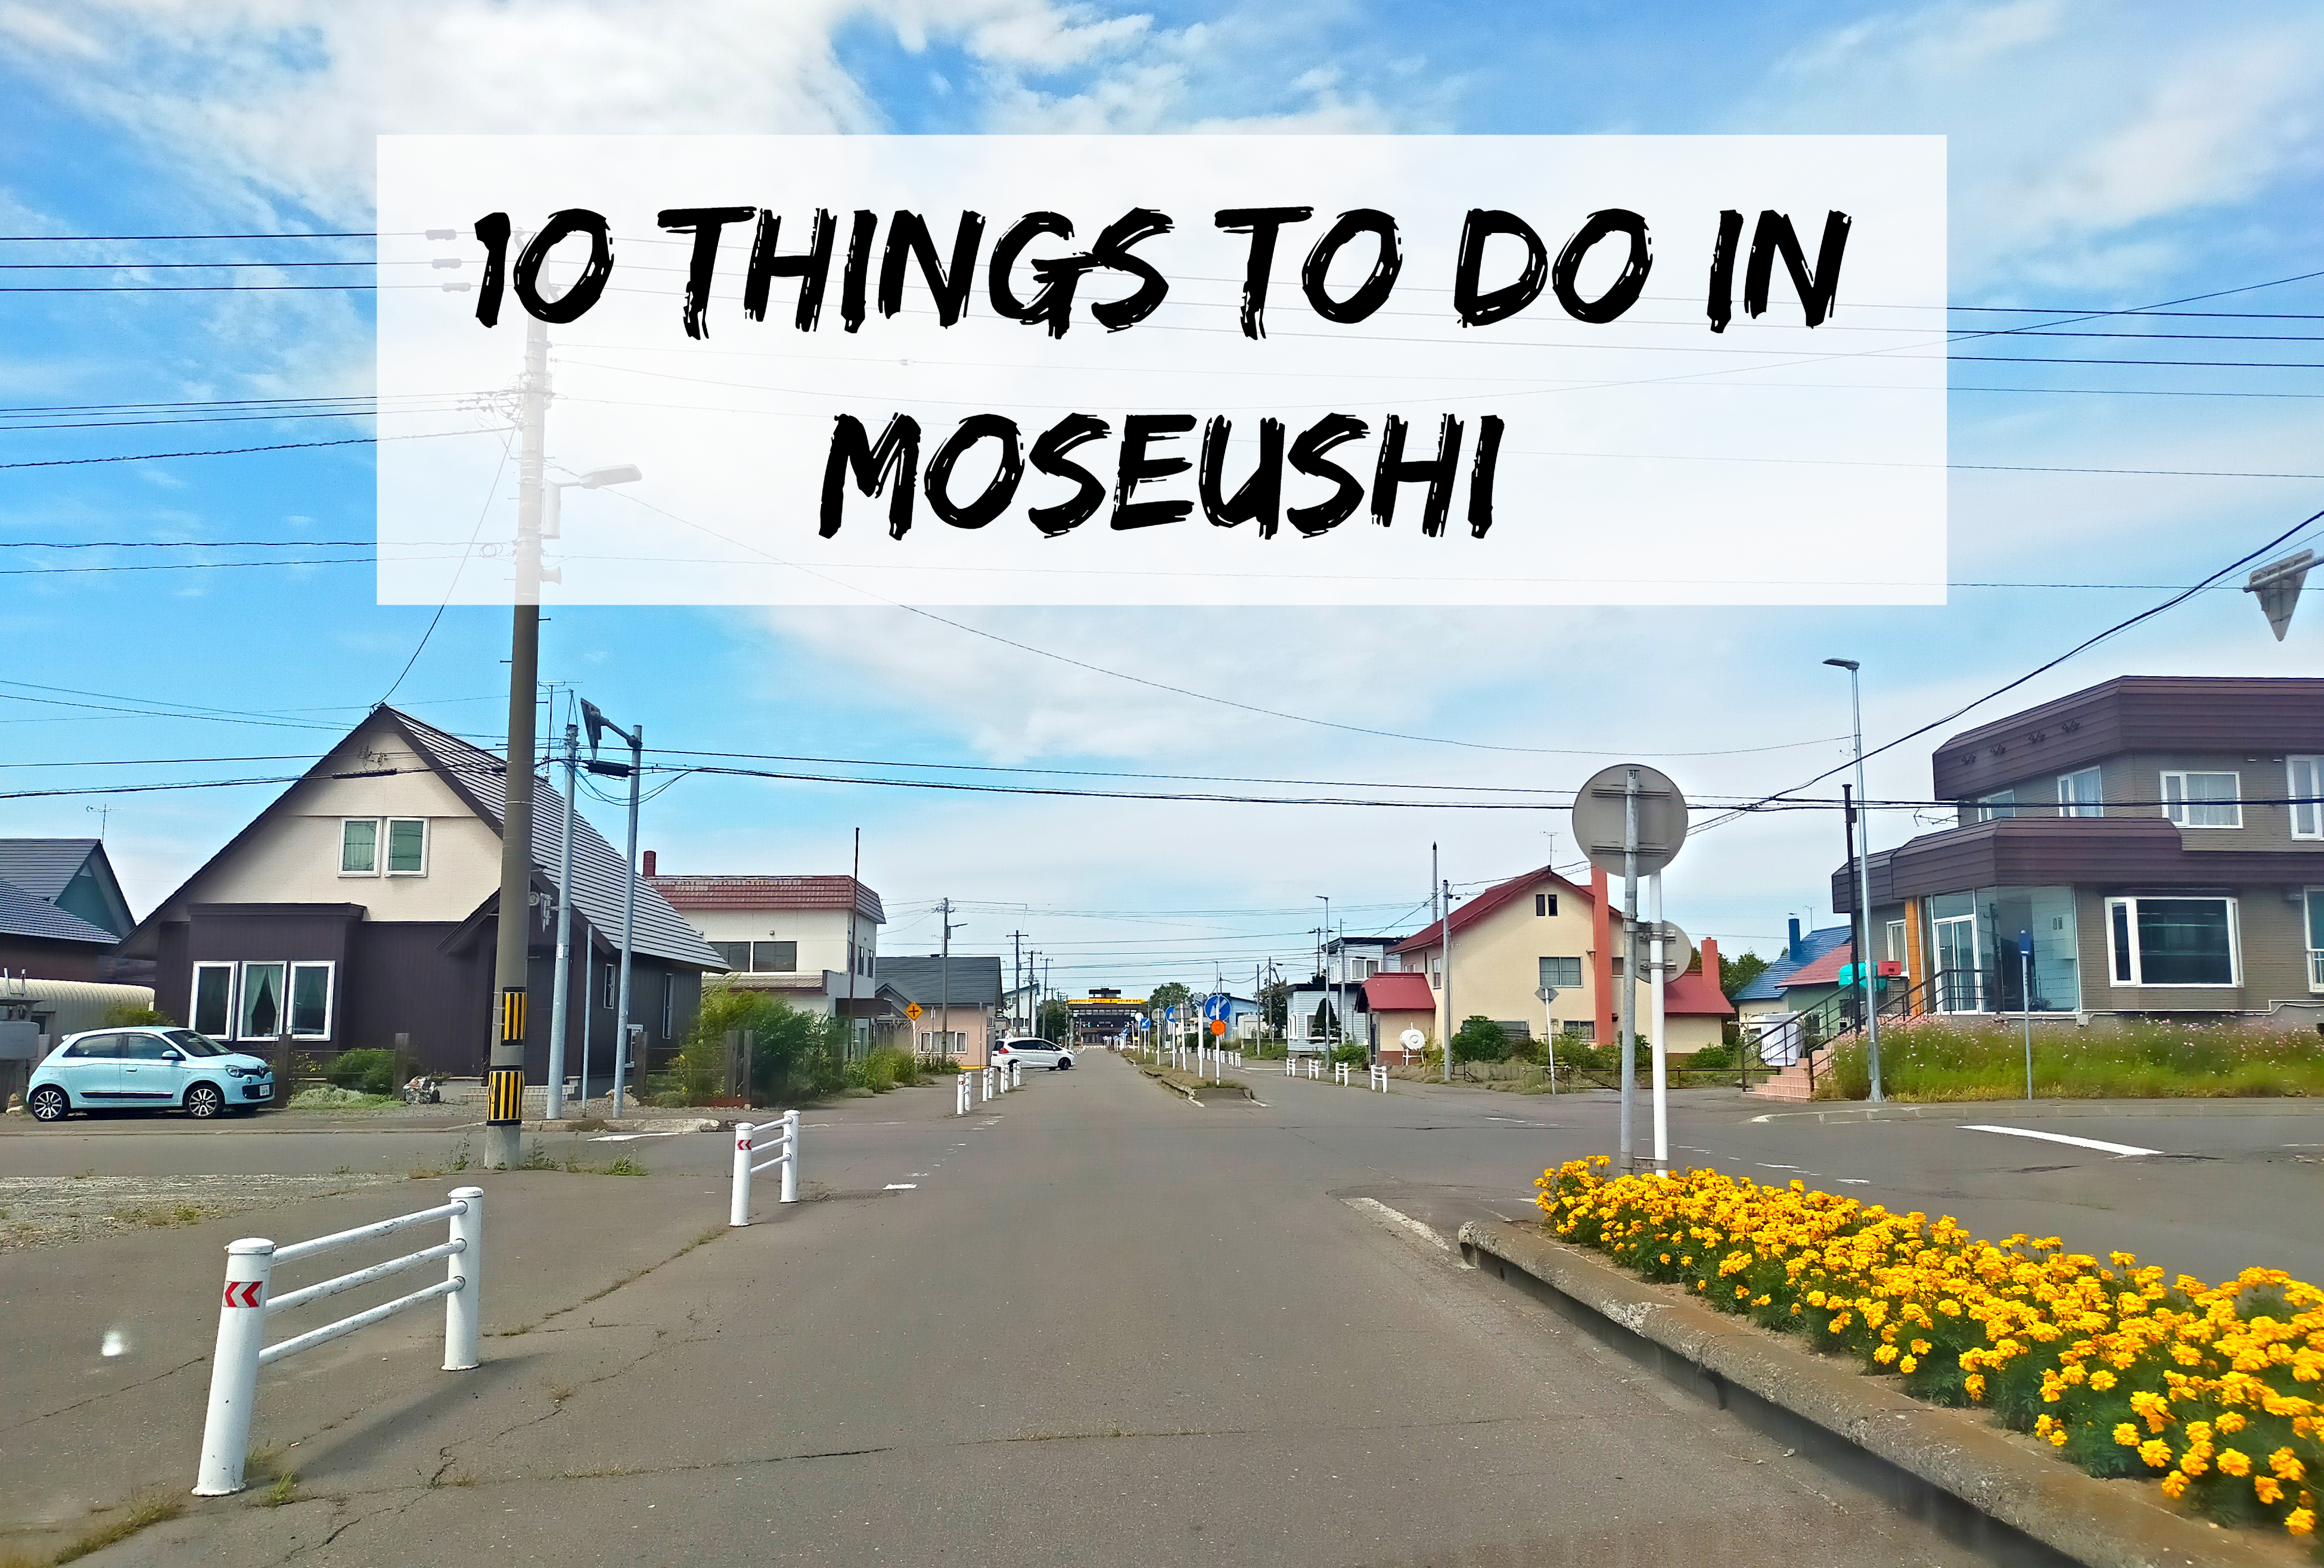 10 Things to Do in Moseushi